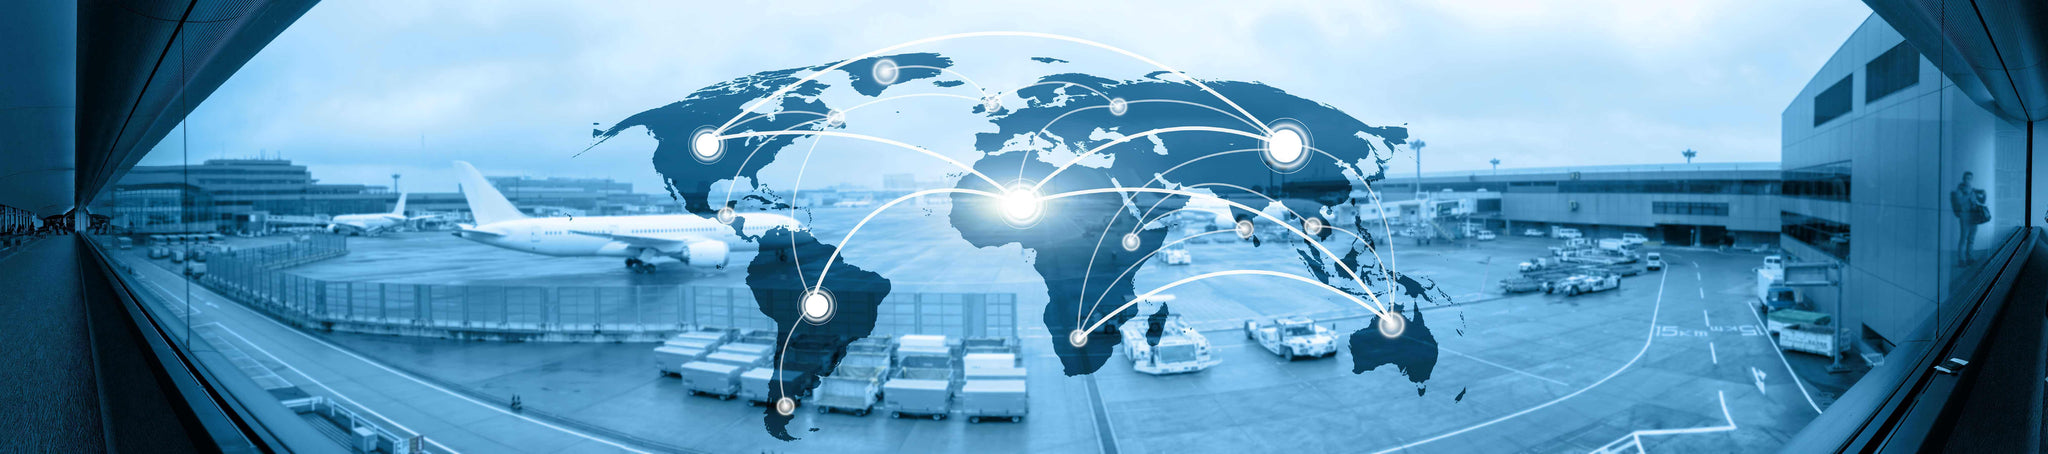 uk-ghana-air-freight-manc-global-logistics